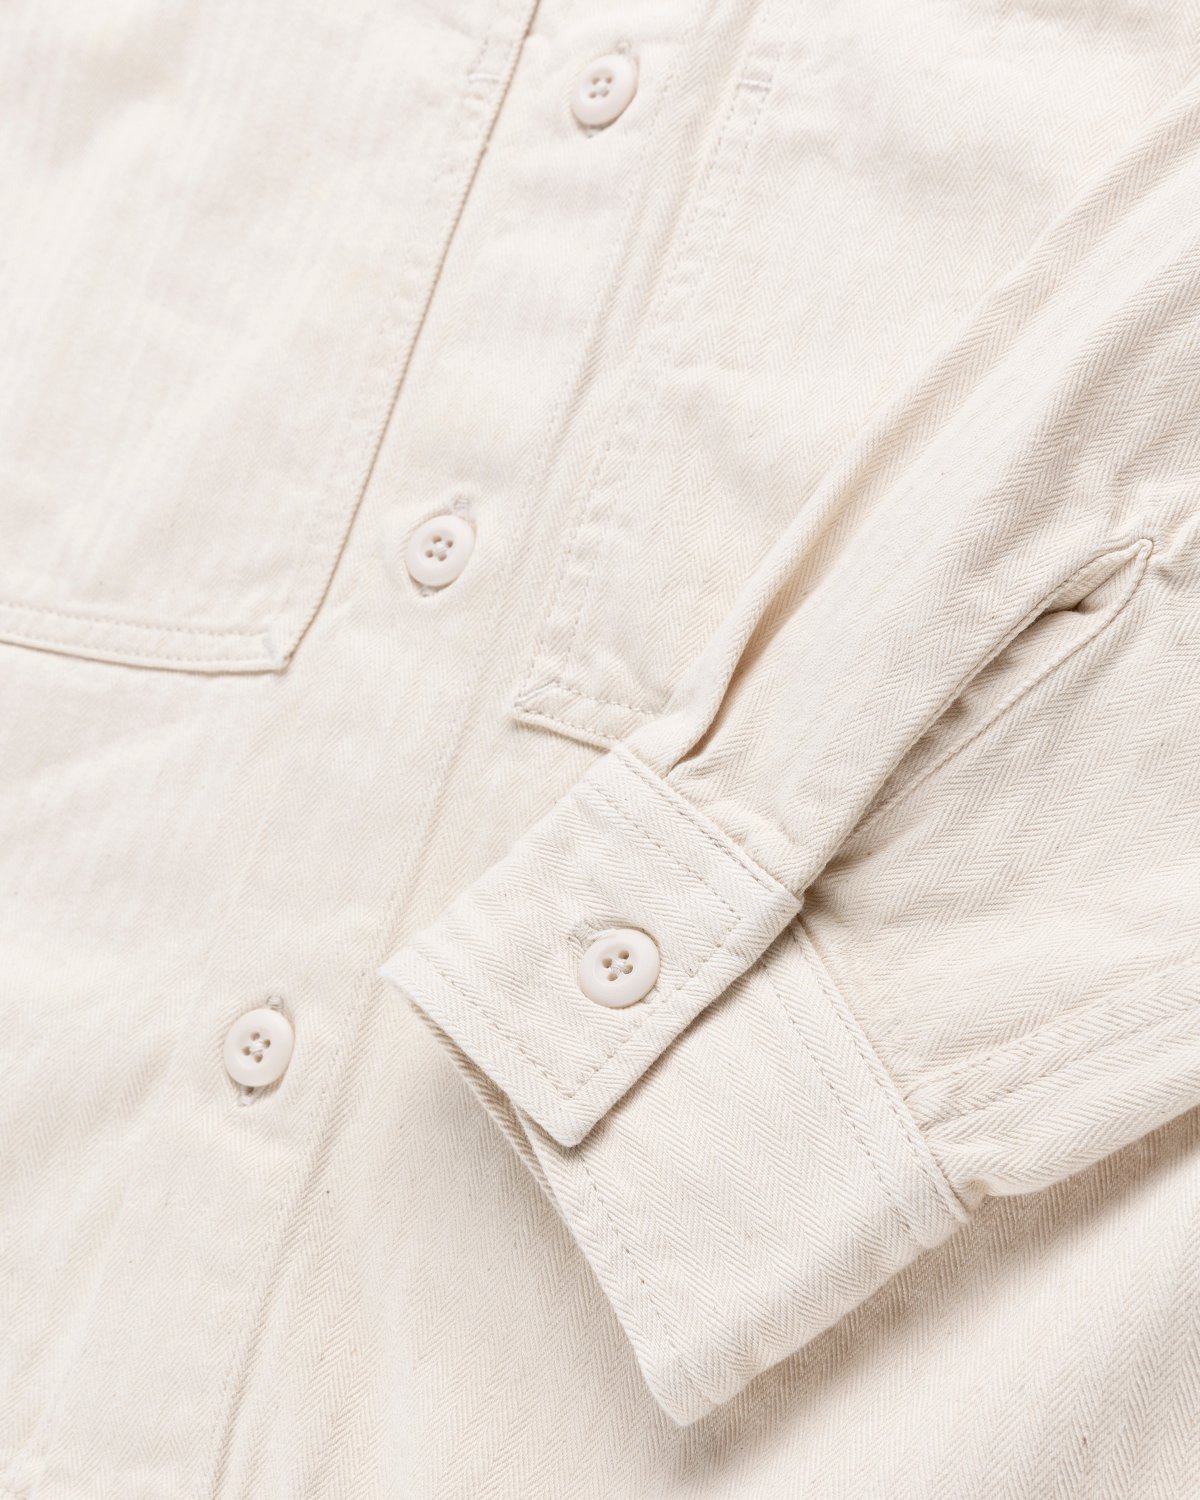 Carhartt WIP - Charter Shirt Natural - Clothing - Beige - Image 4